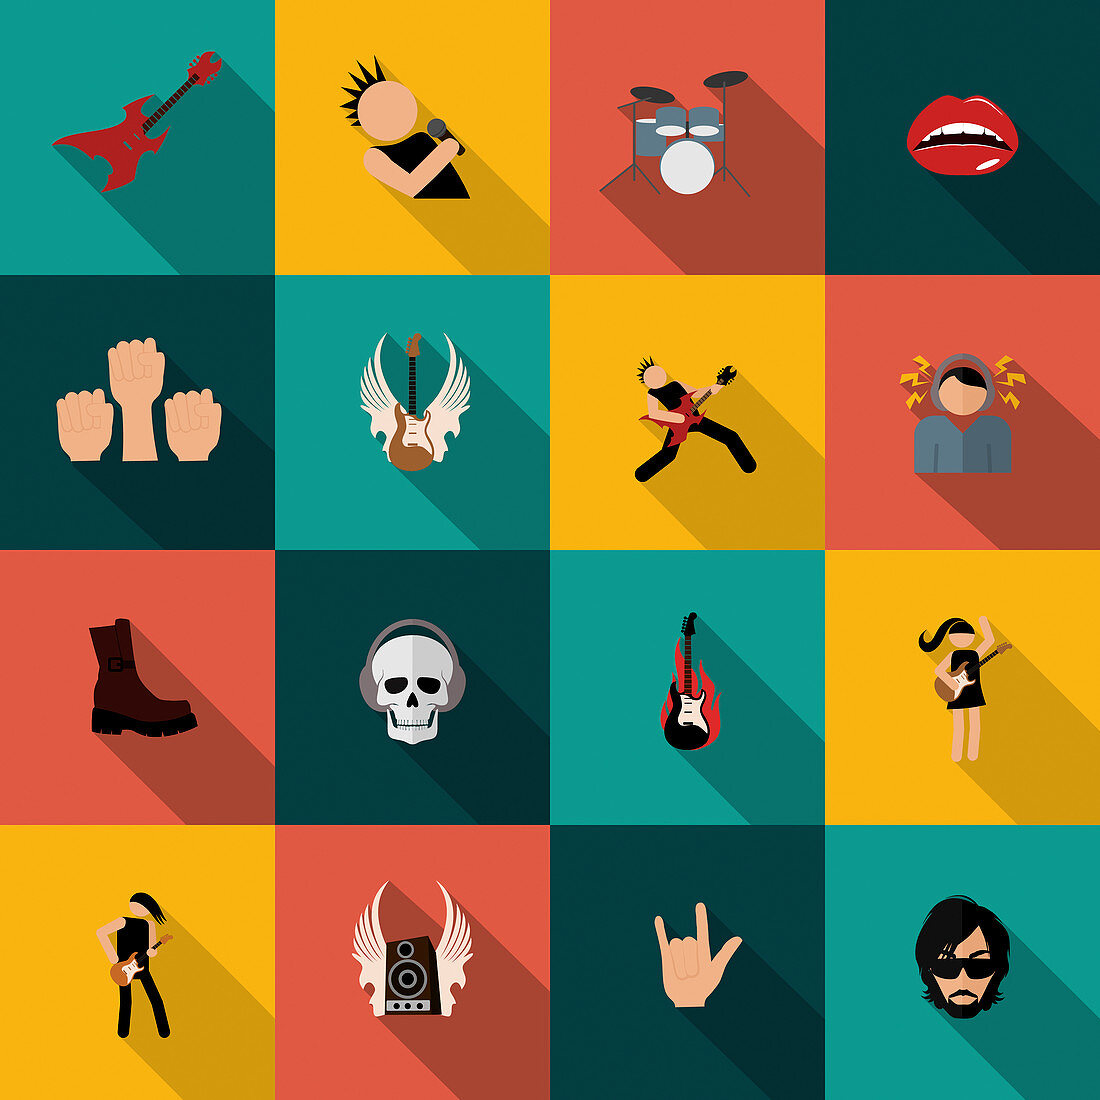 Rock music icons, illustration